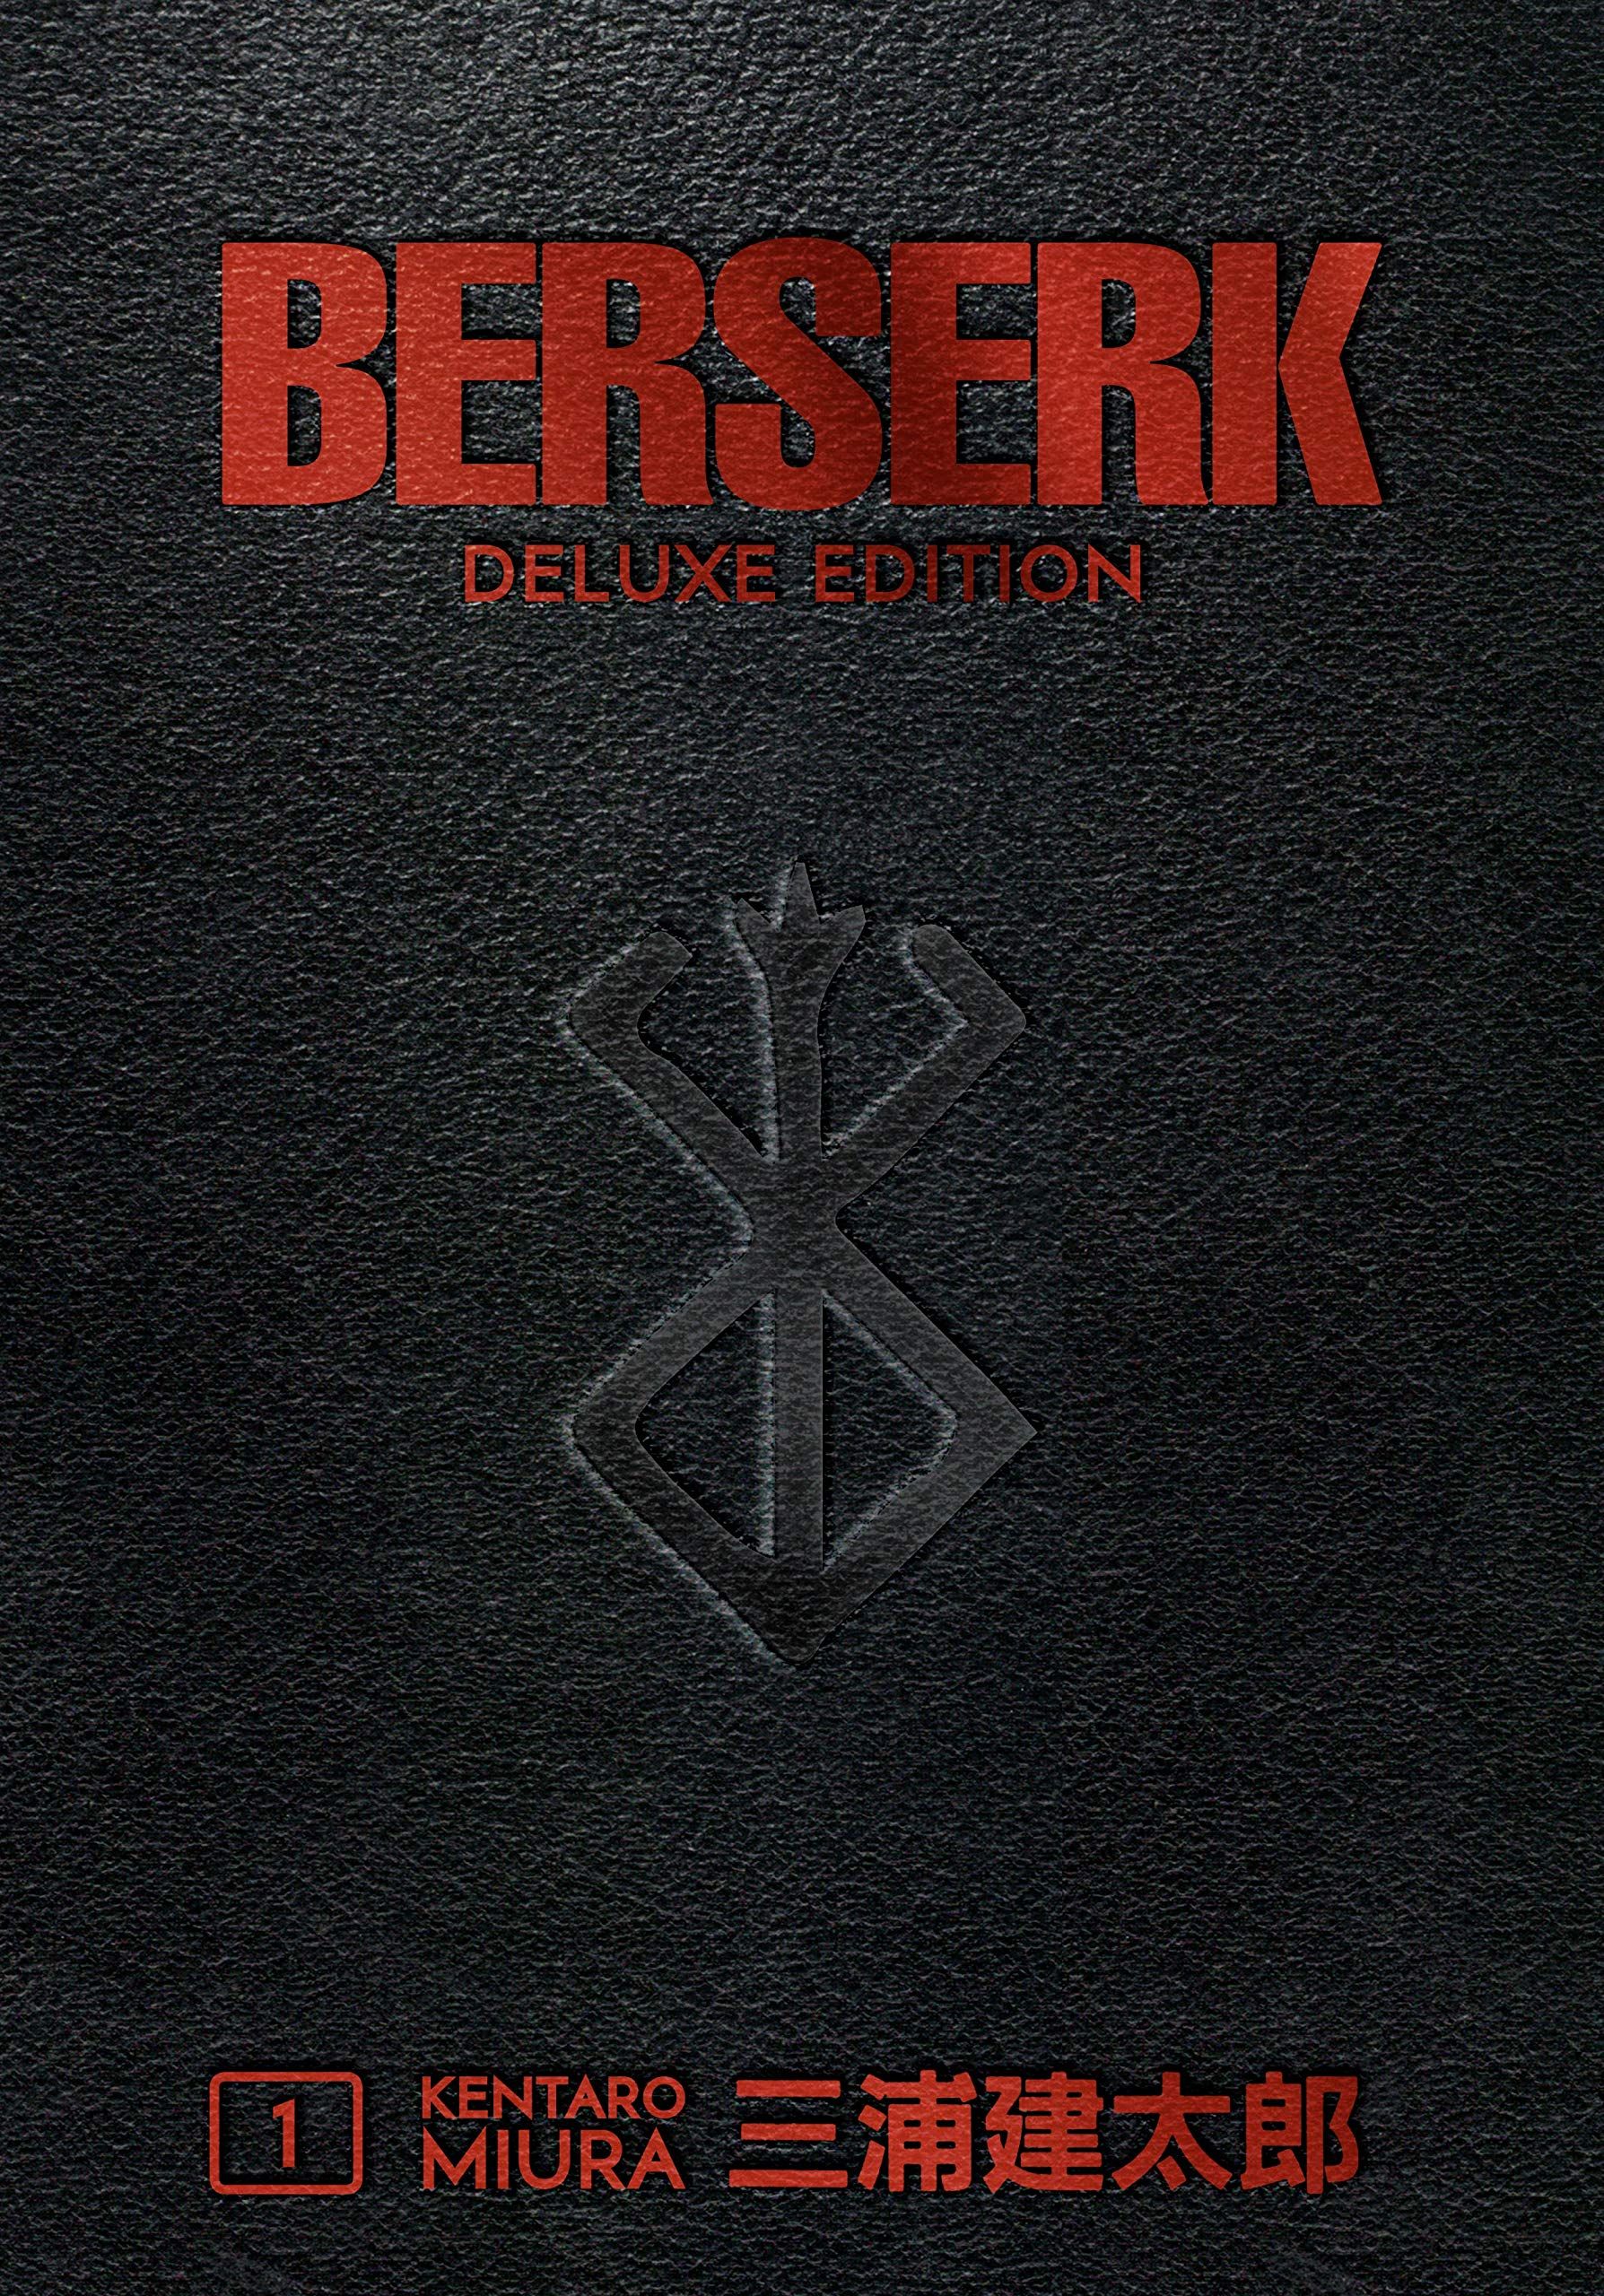 Berserk by Kentaro Miura cover